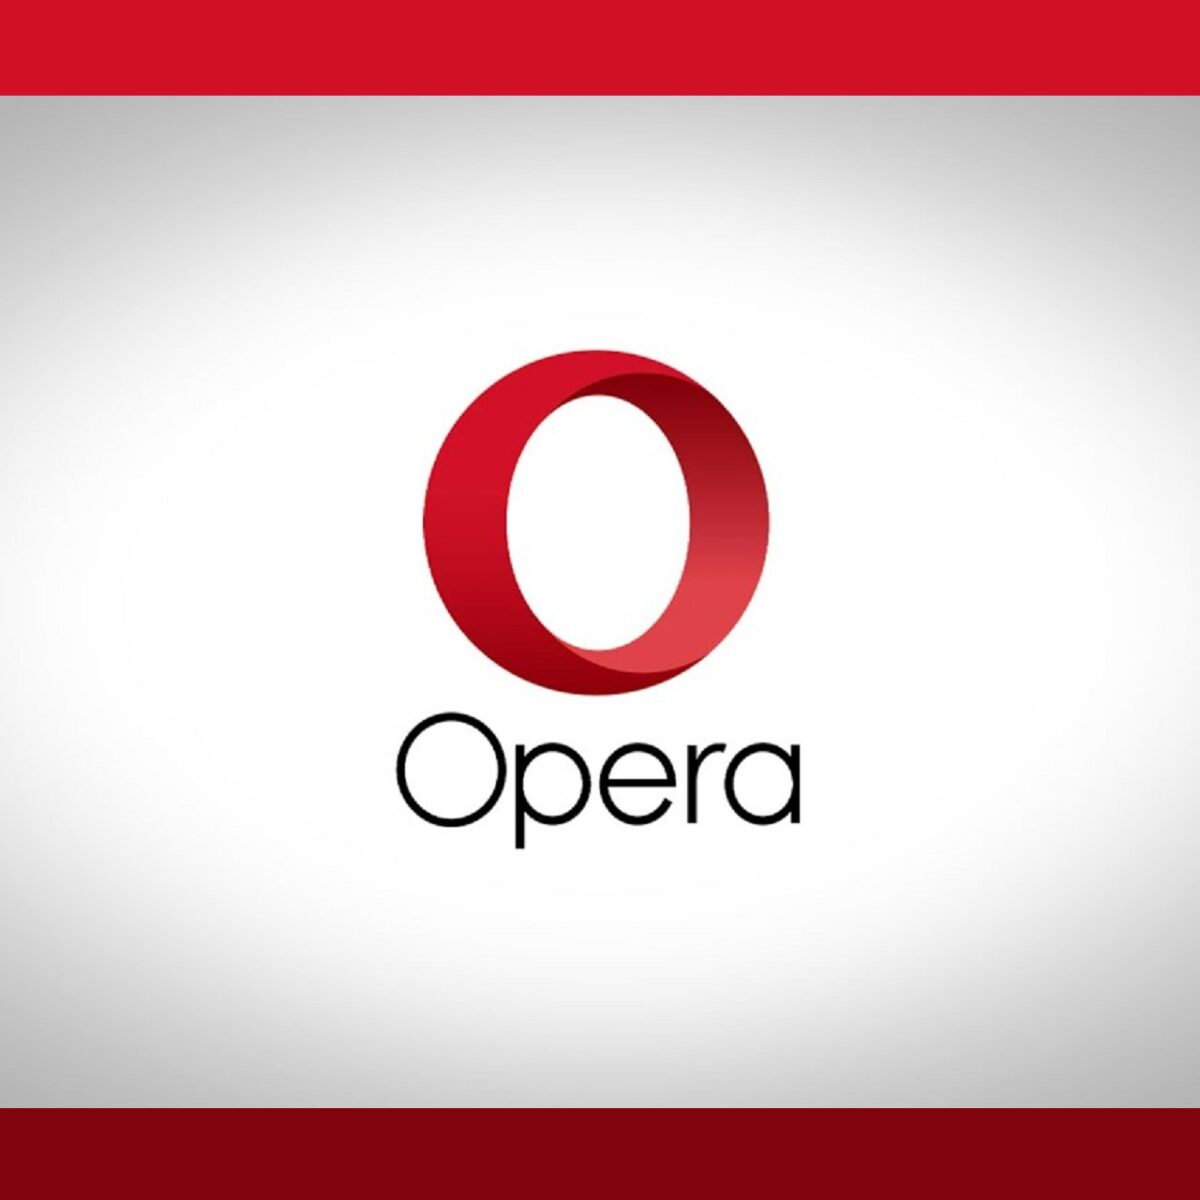 opera for windows 10